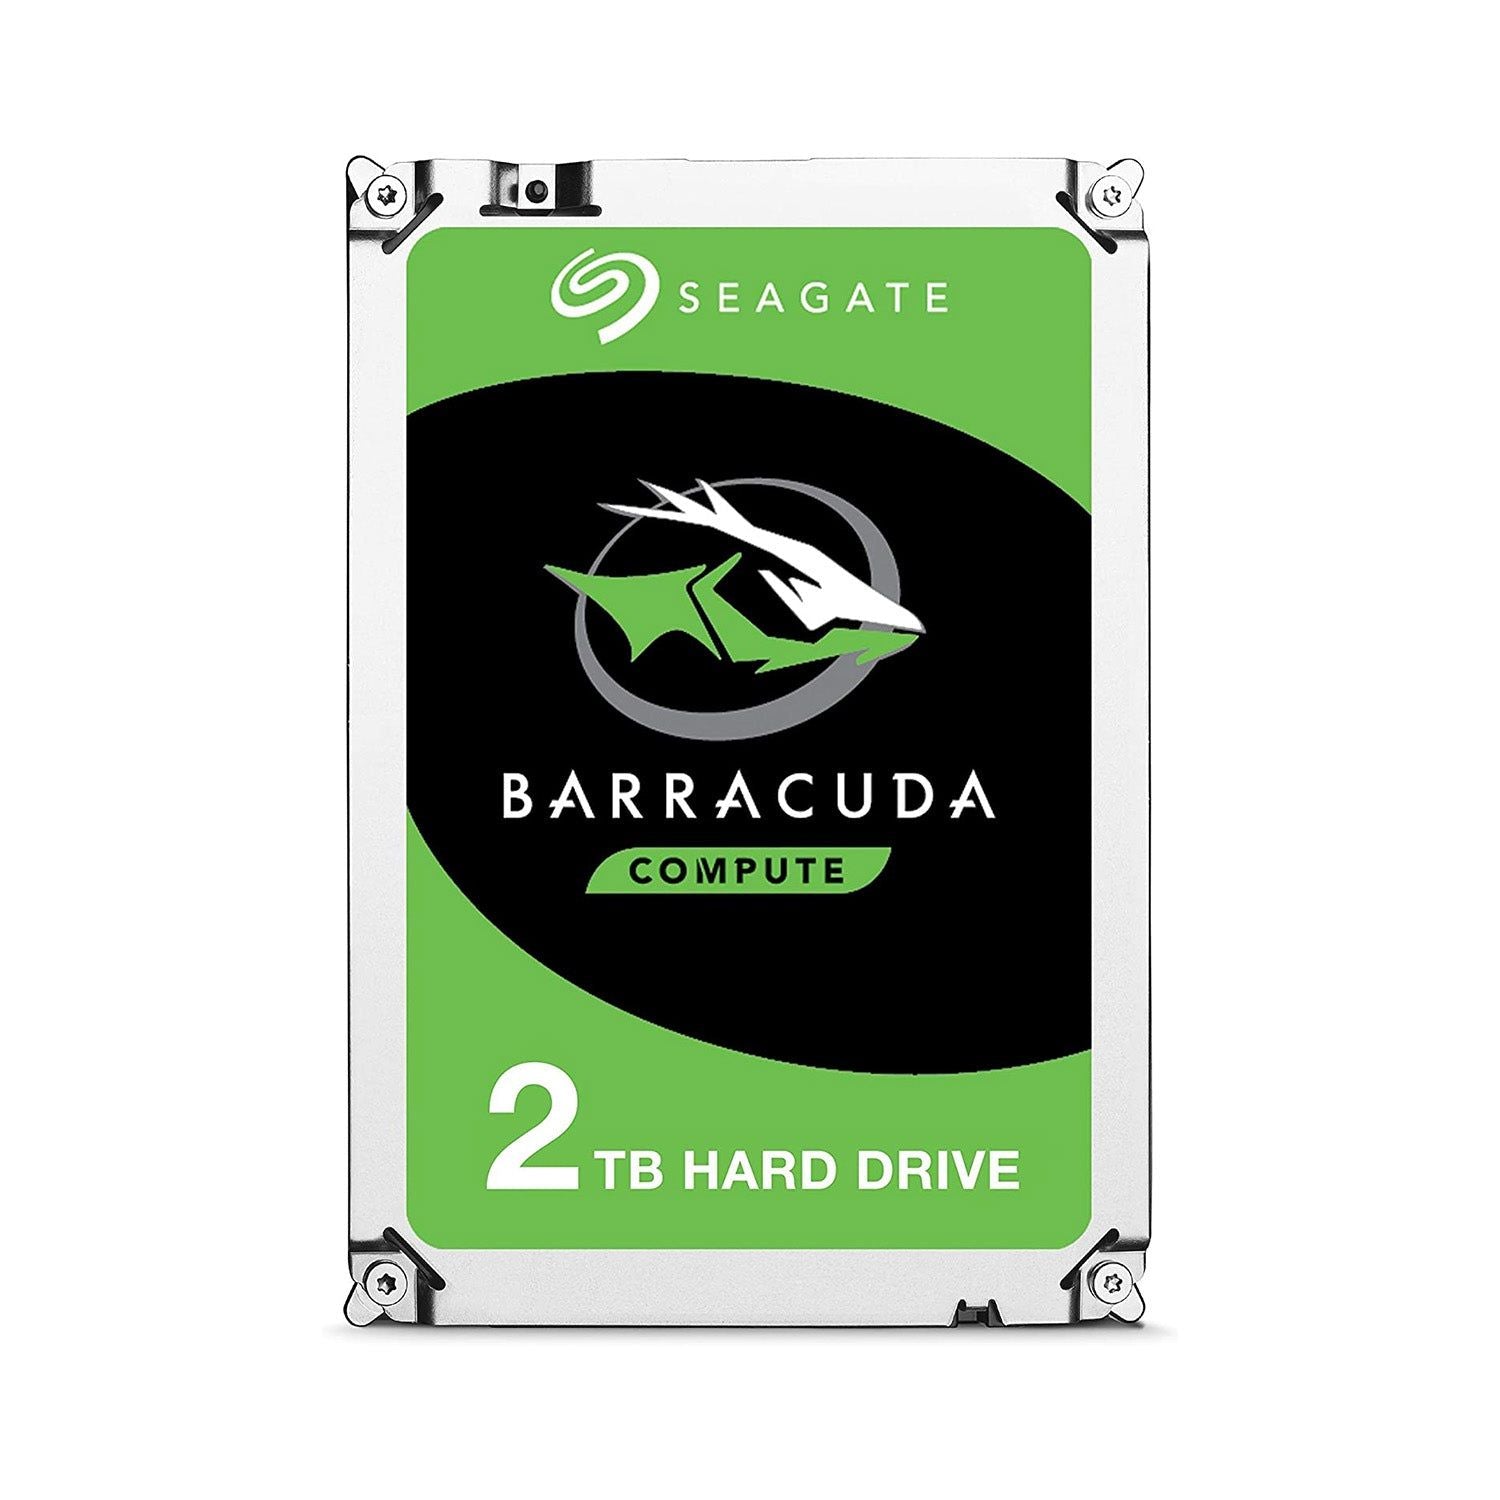 HD SEAGATE 2TB BARRACUDA SATA III - OVERCLOCK Computer